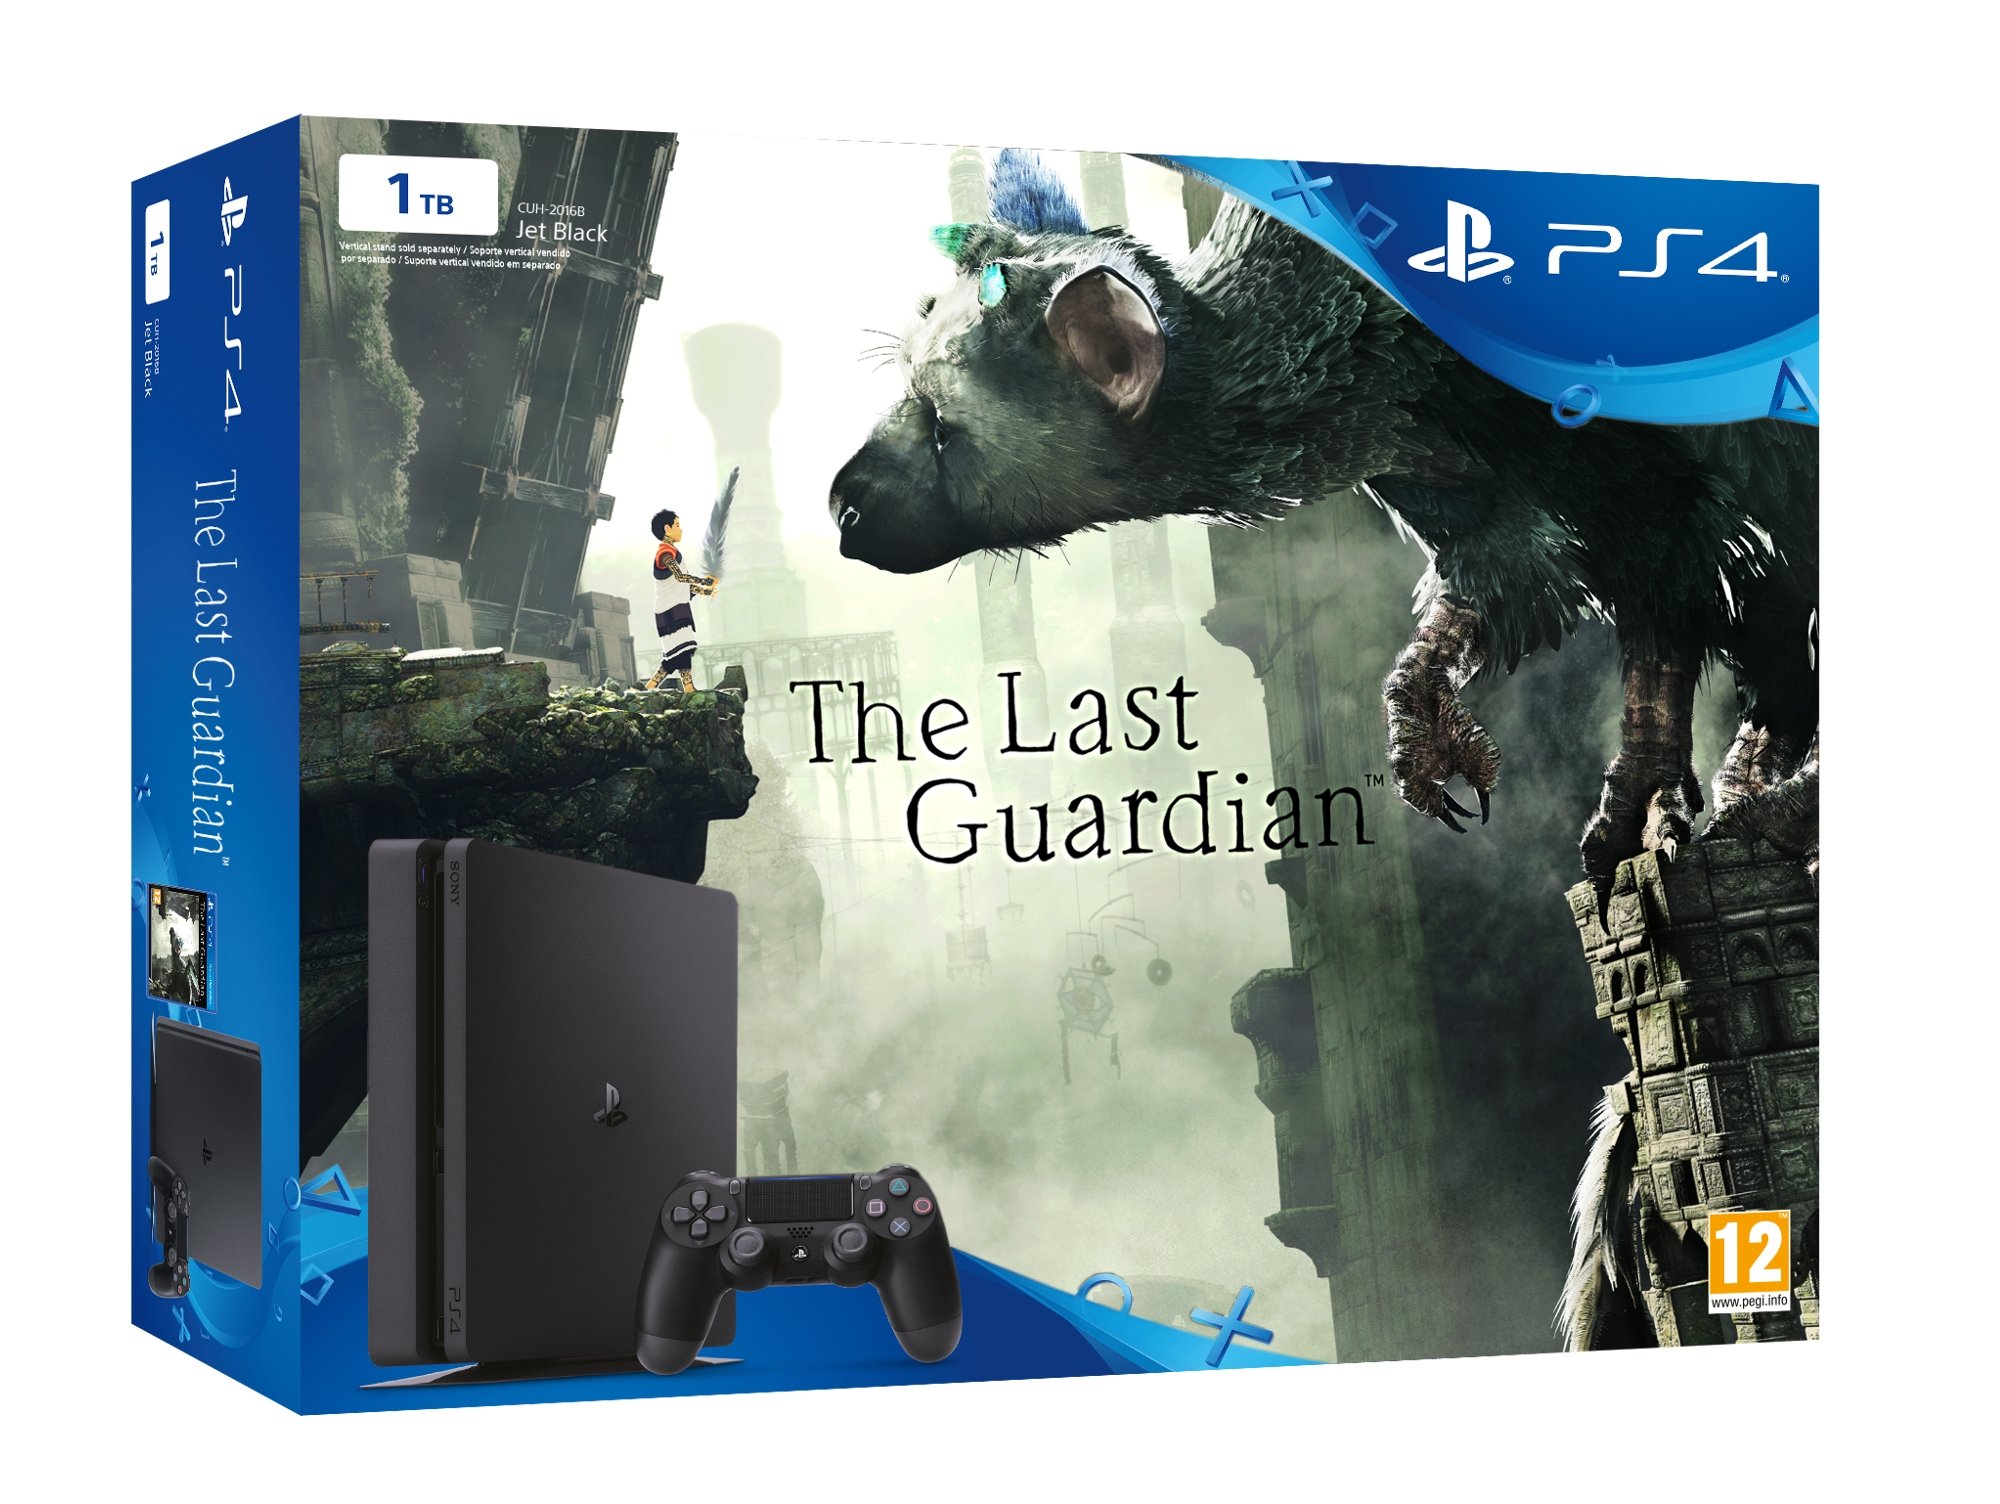 Consola PS4 Slim + The last guardian (1 TB)